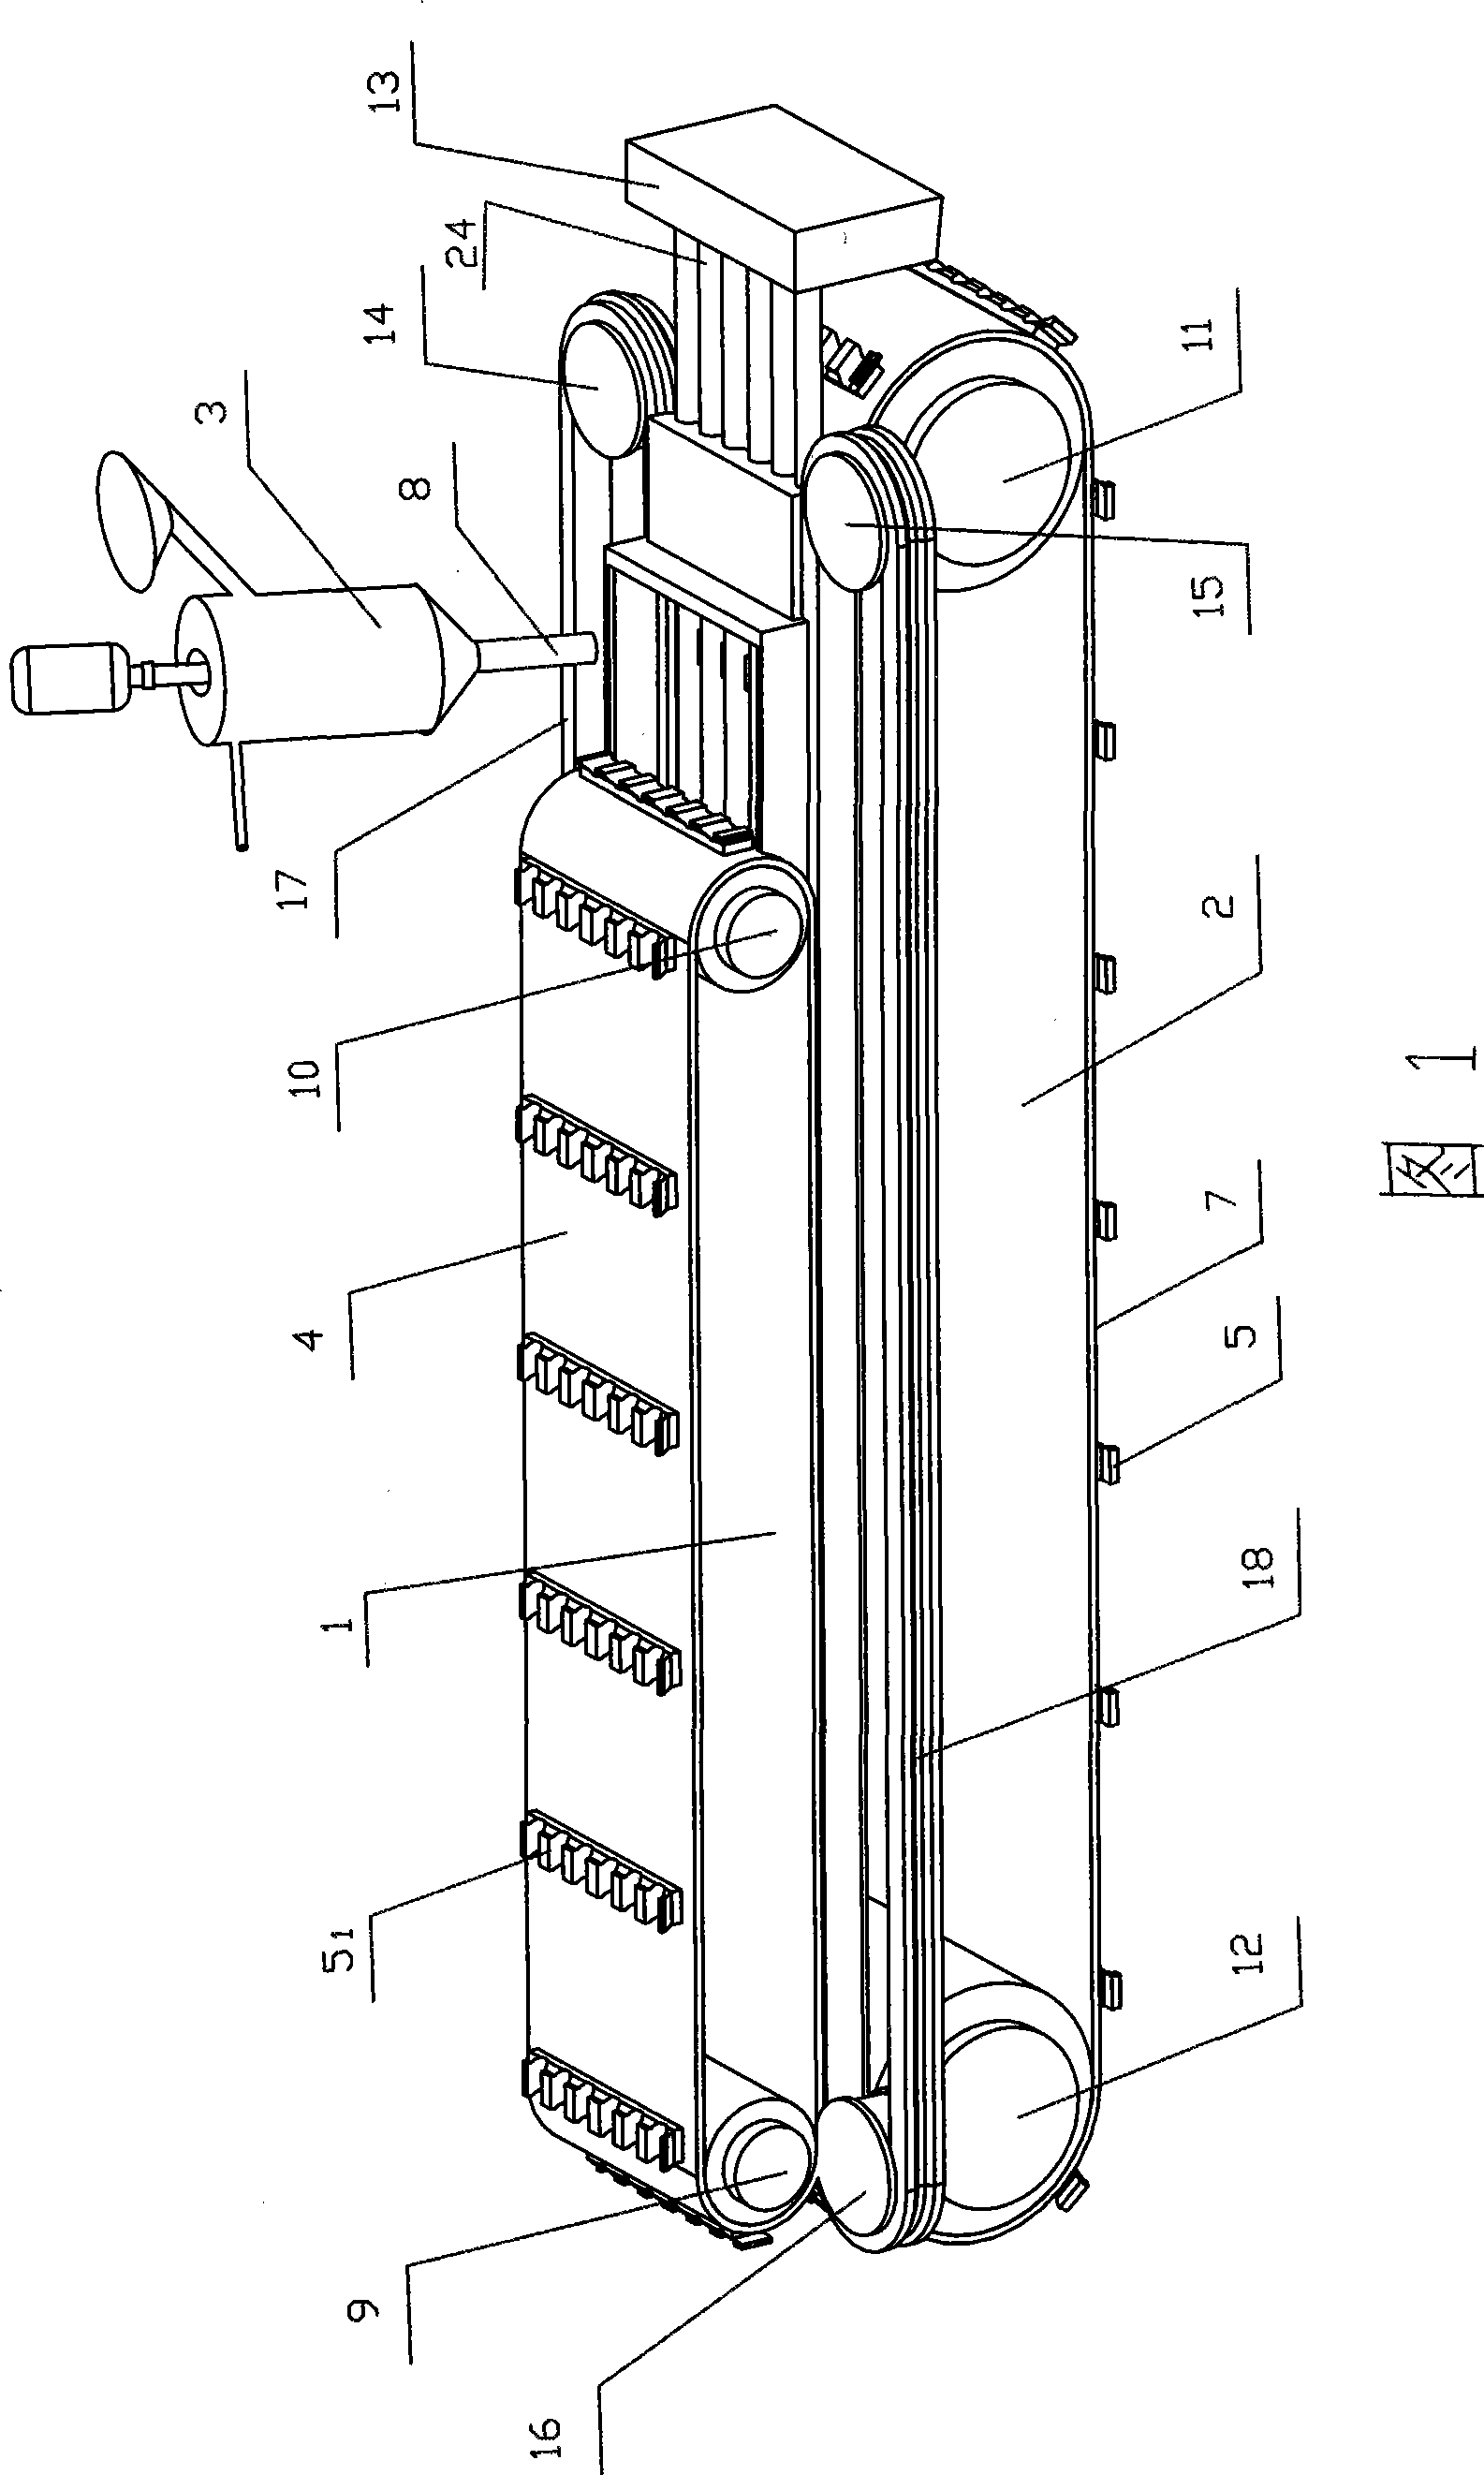 Conveyer-belt type block molding device for continuous producing gypsum block